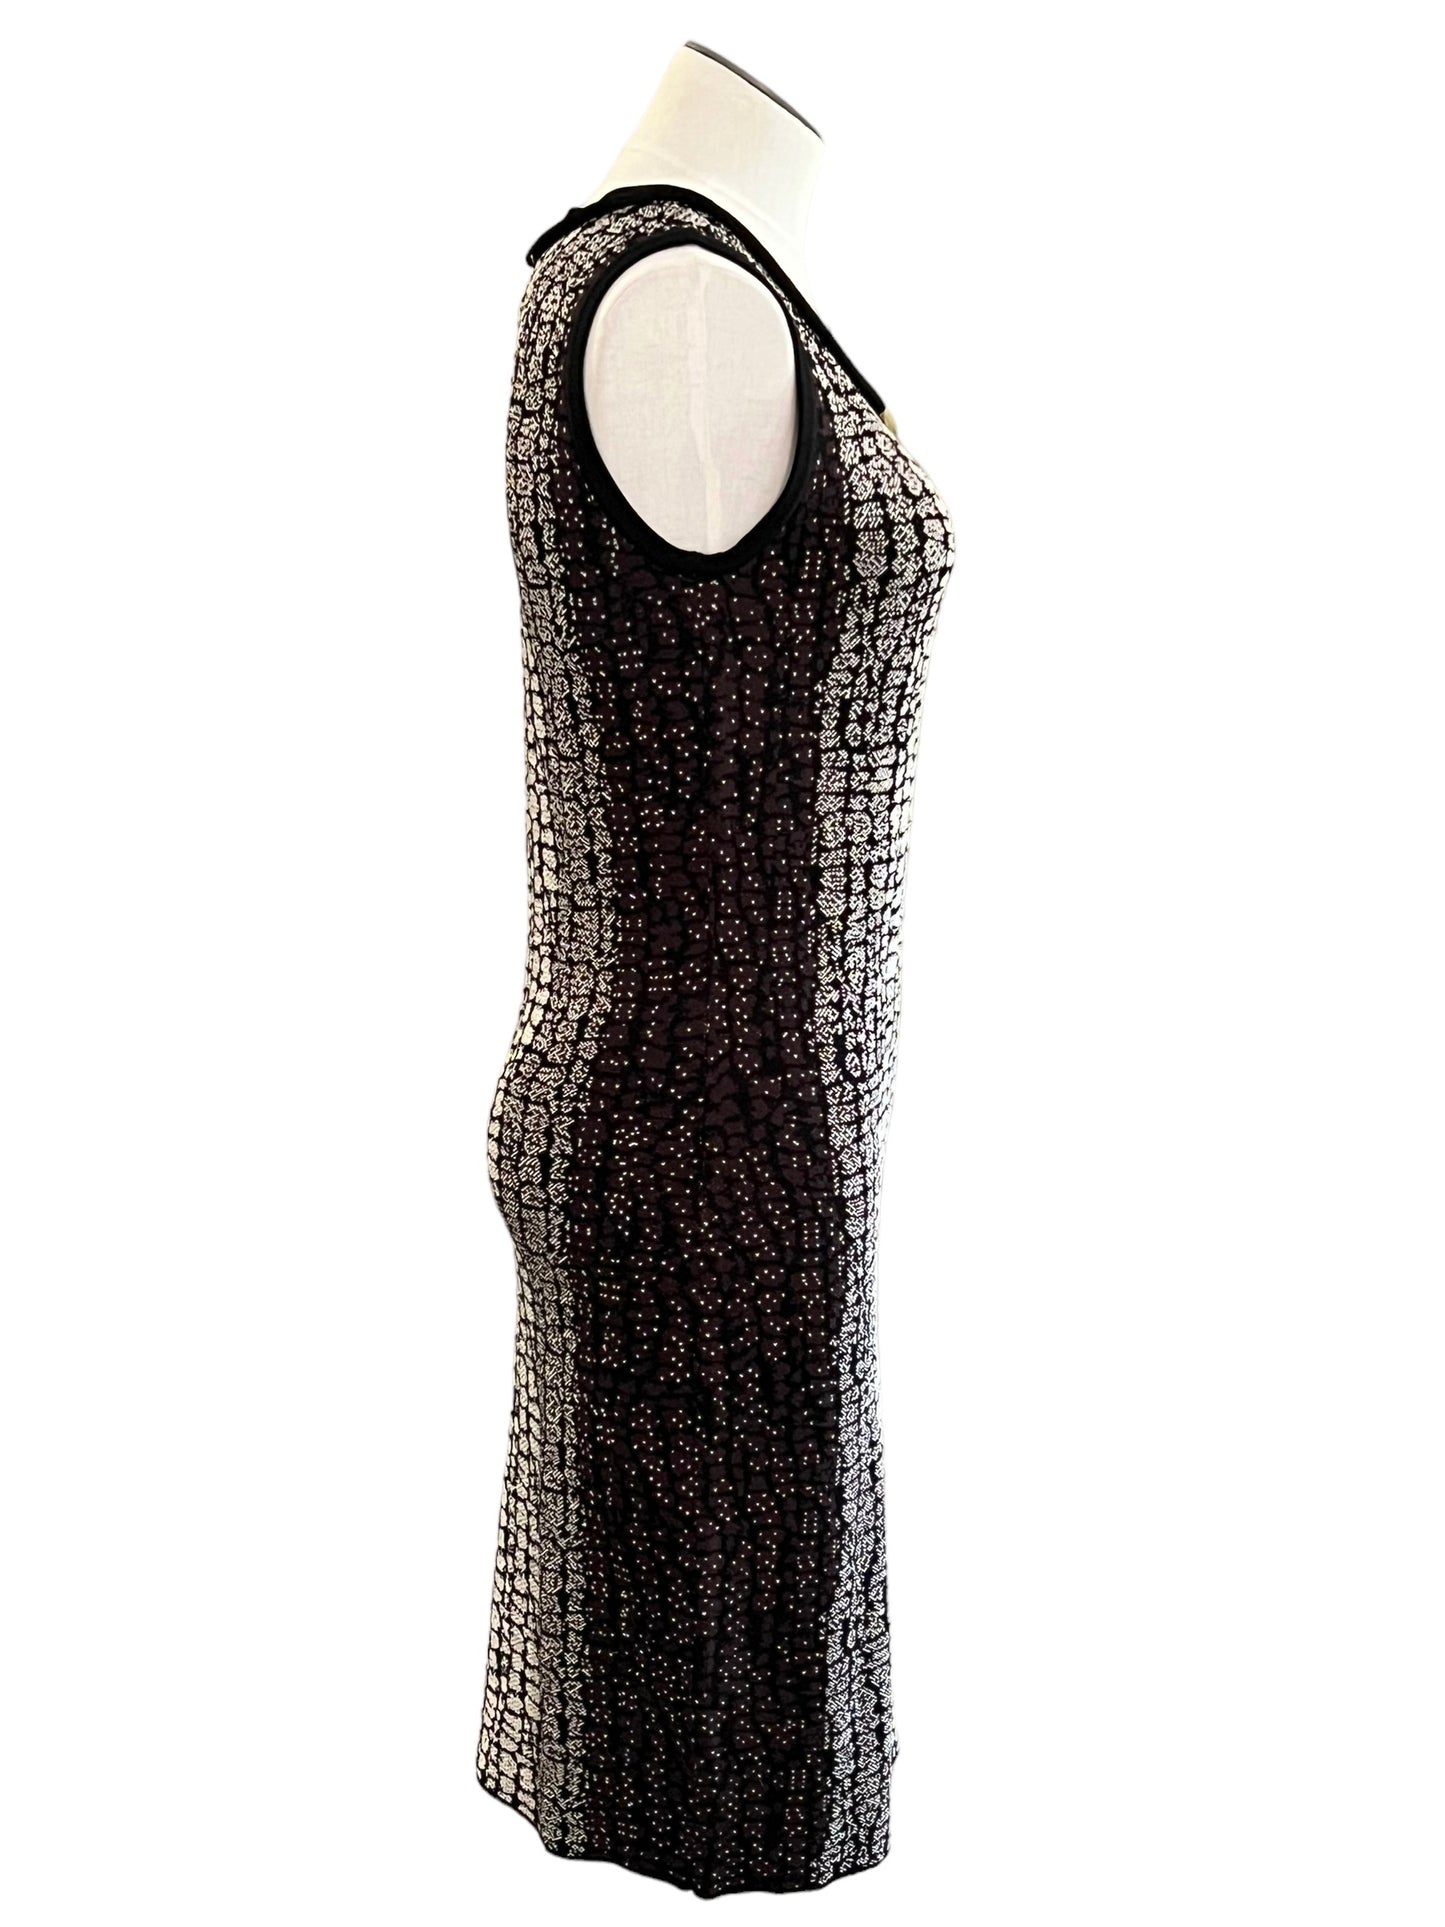 Carmen Marc Valvo Size S Metallic Snake Print Dress